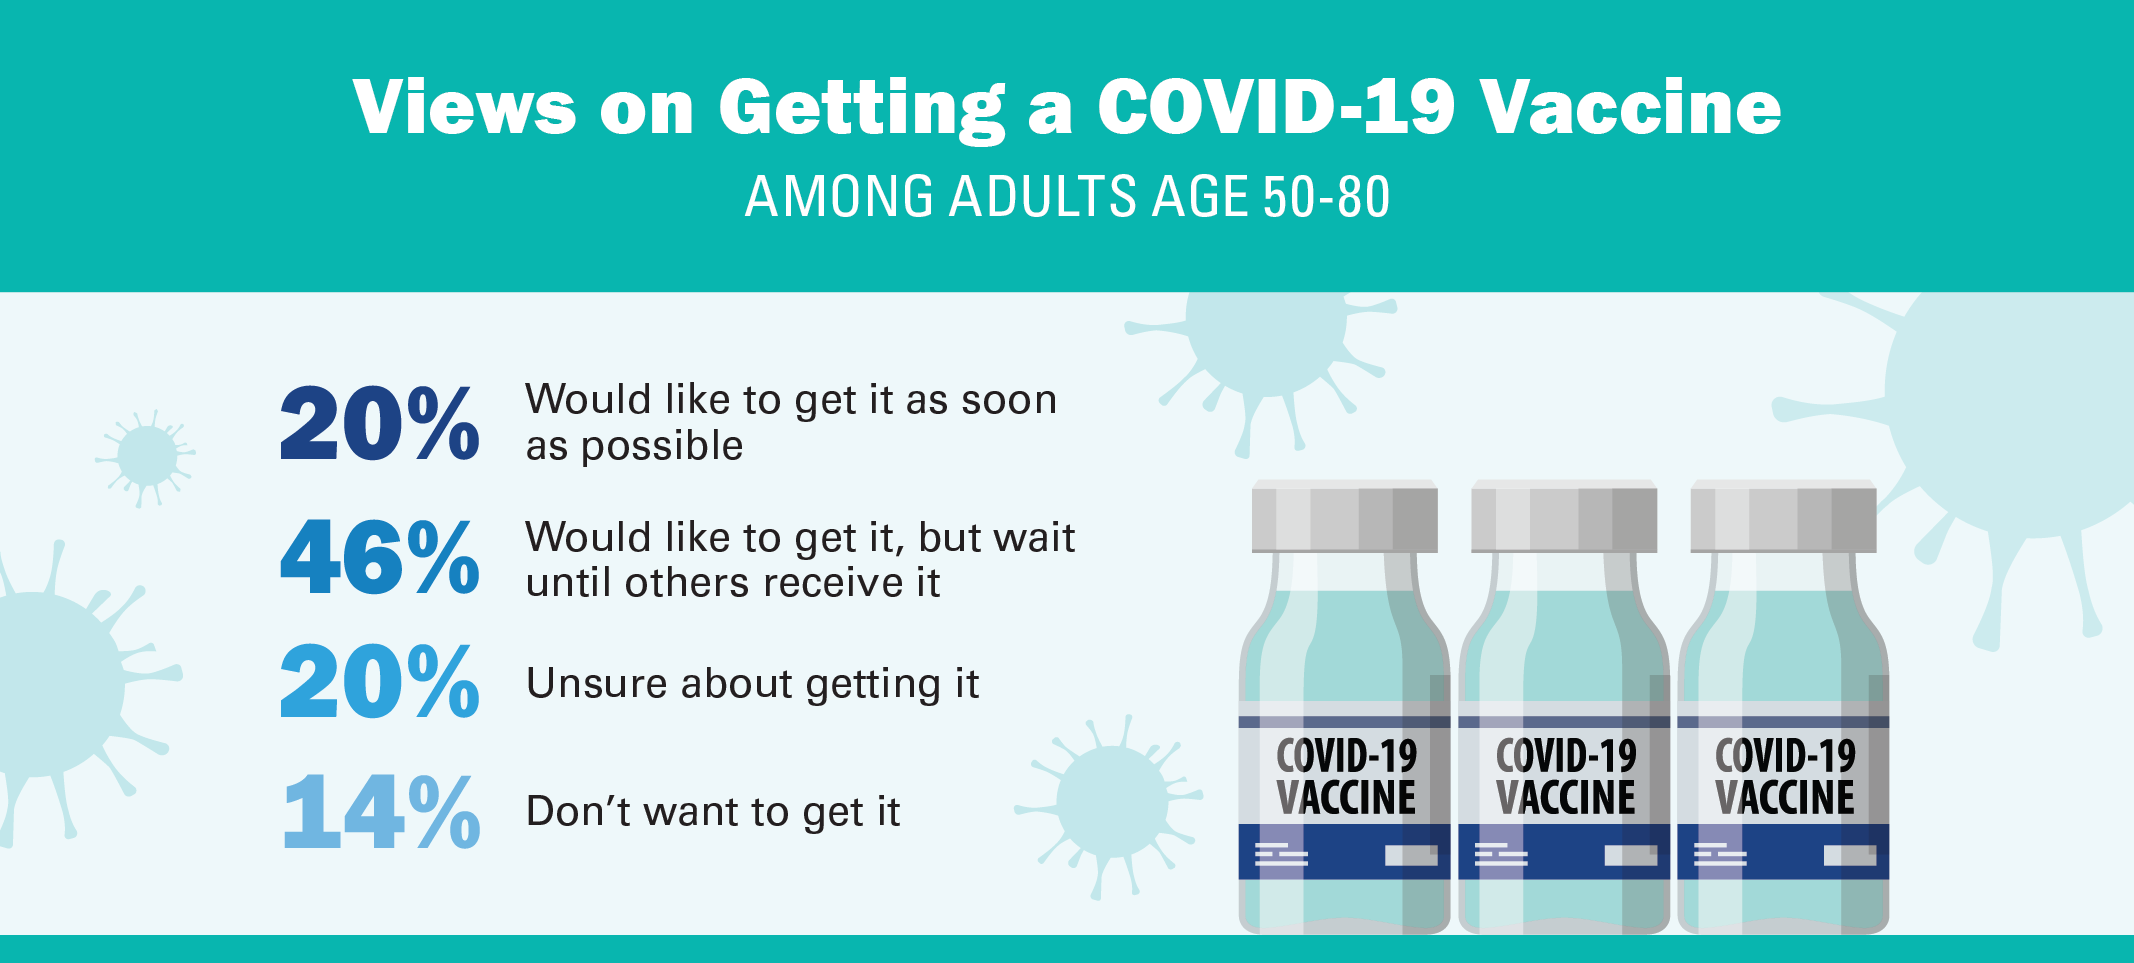 three COVID-19 vaccine bottles